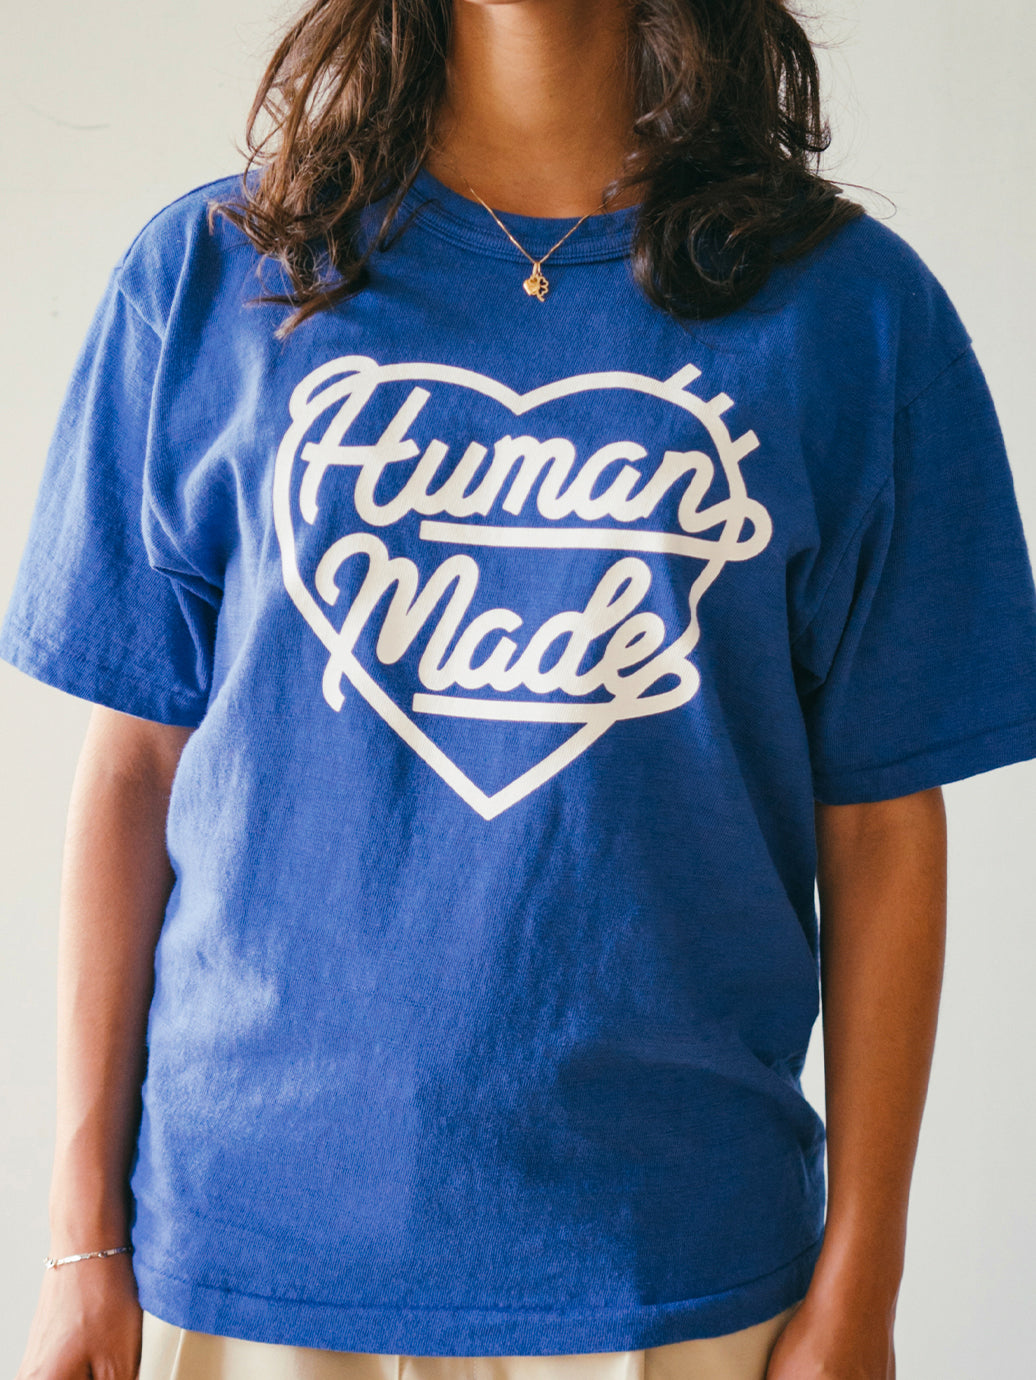 Human Made Color T-Shirt #2